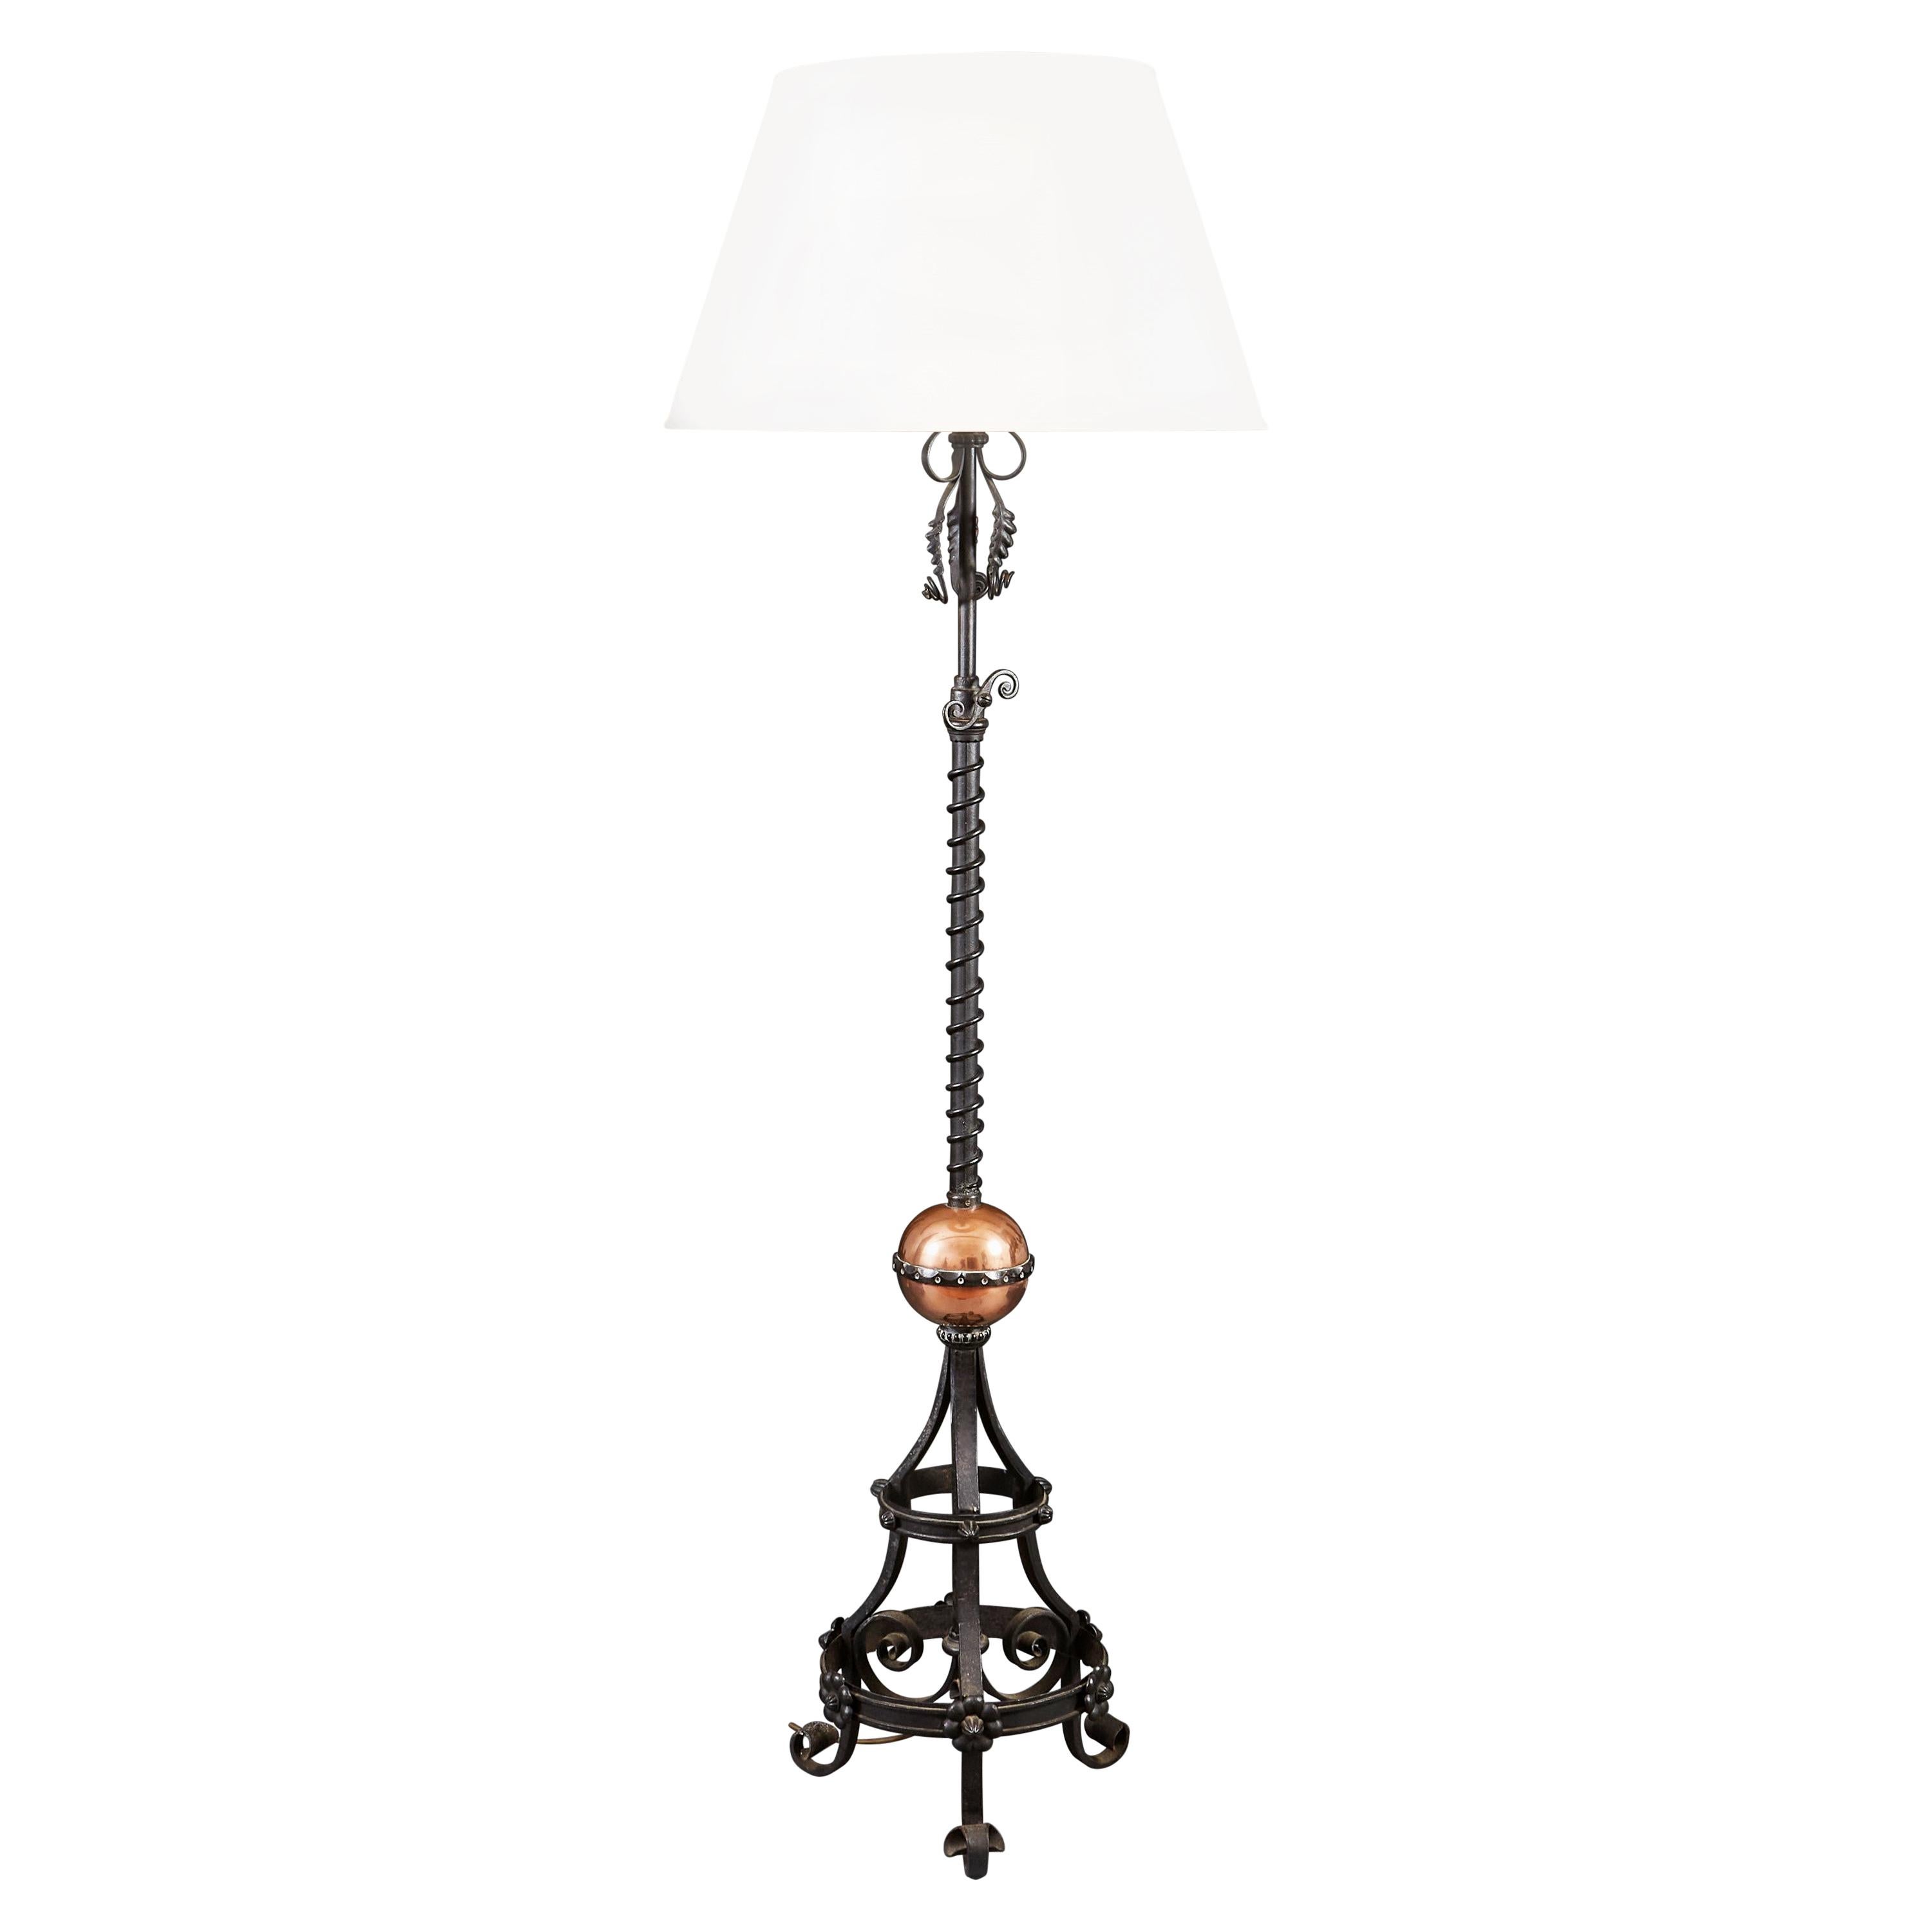 Late 19th Century Arts & Crafts Ebonised Iron Standard Lamp with Tripod Base